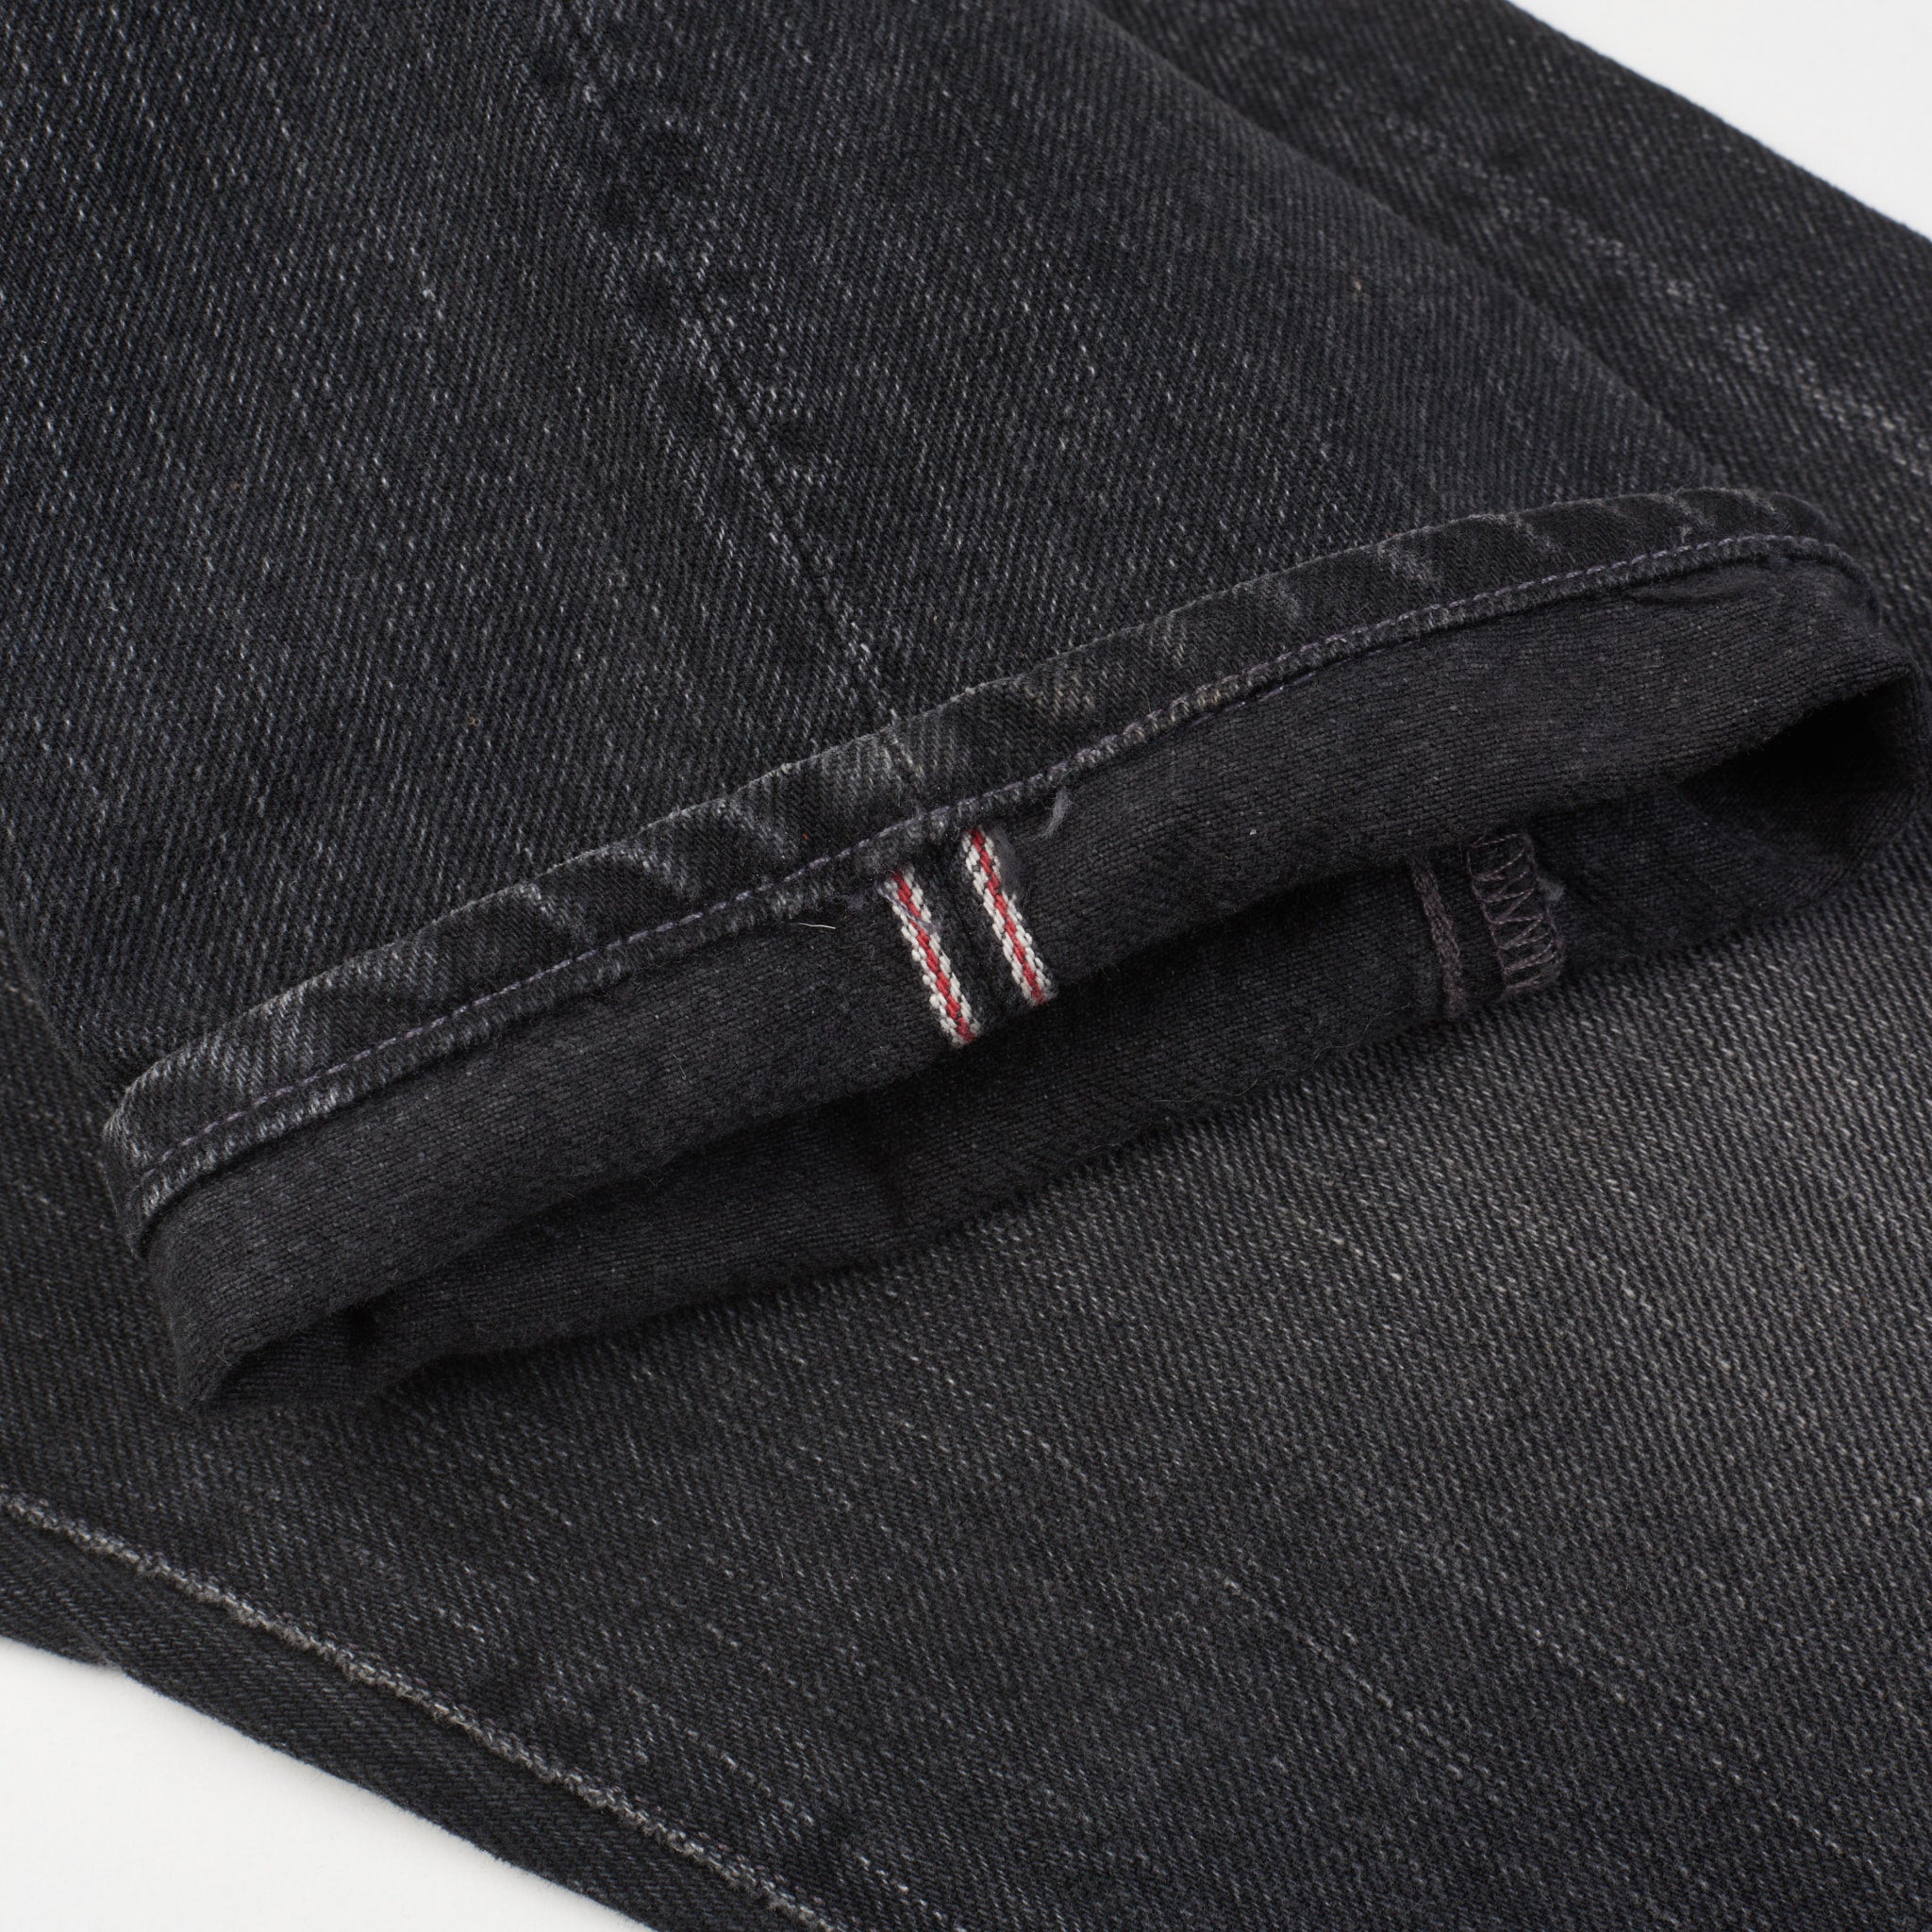 3x1 M3 Black Denim Selvedge Slim Fit Jeans Pants US 33 3X1